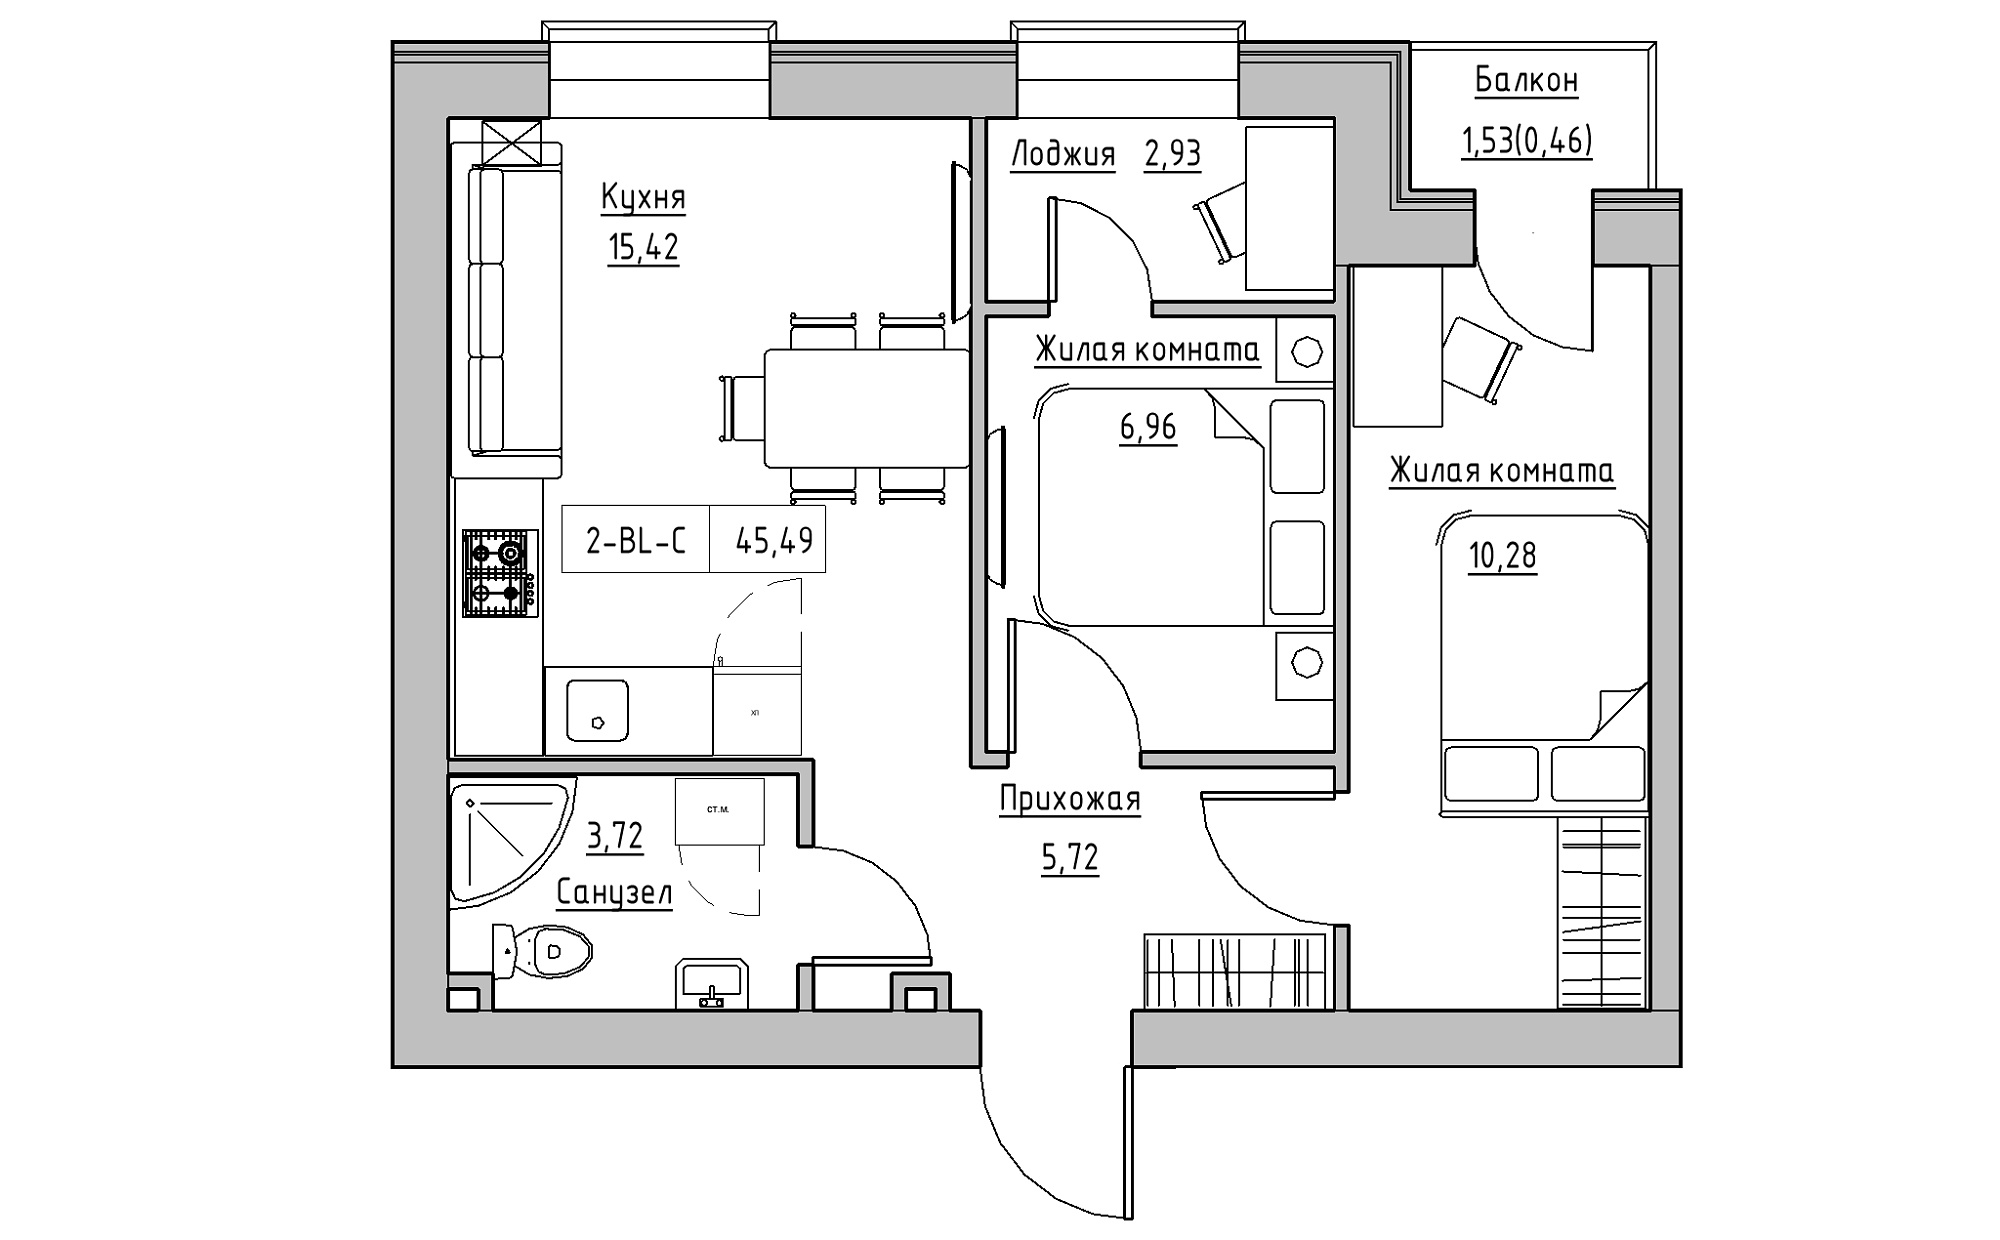 Planning 2-rm flats area 45.49m2, KS-022-04/0008.